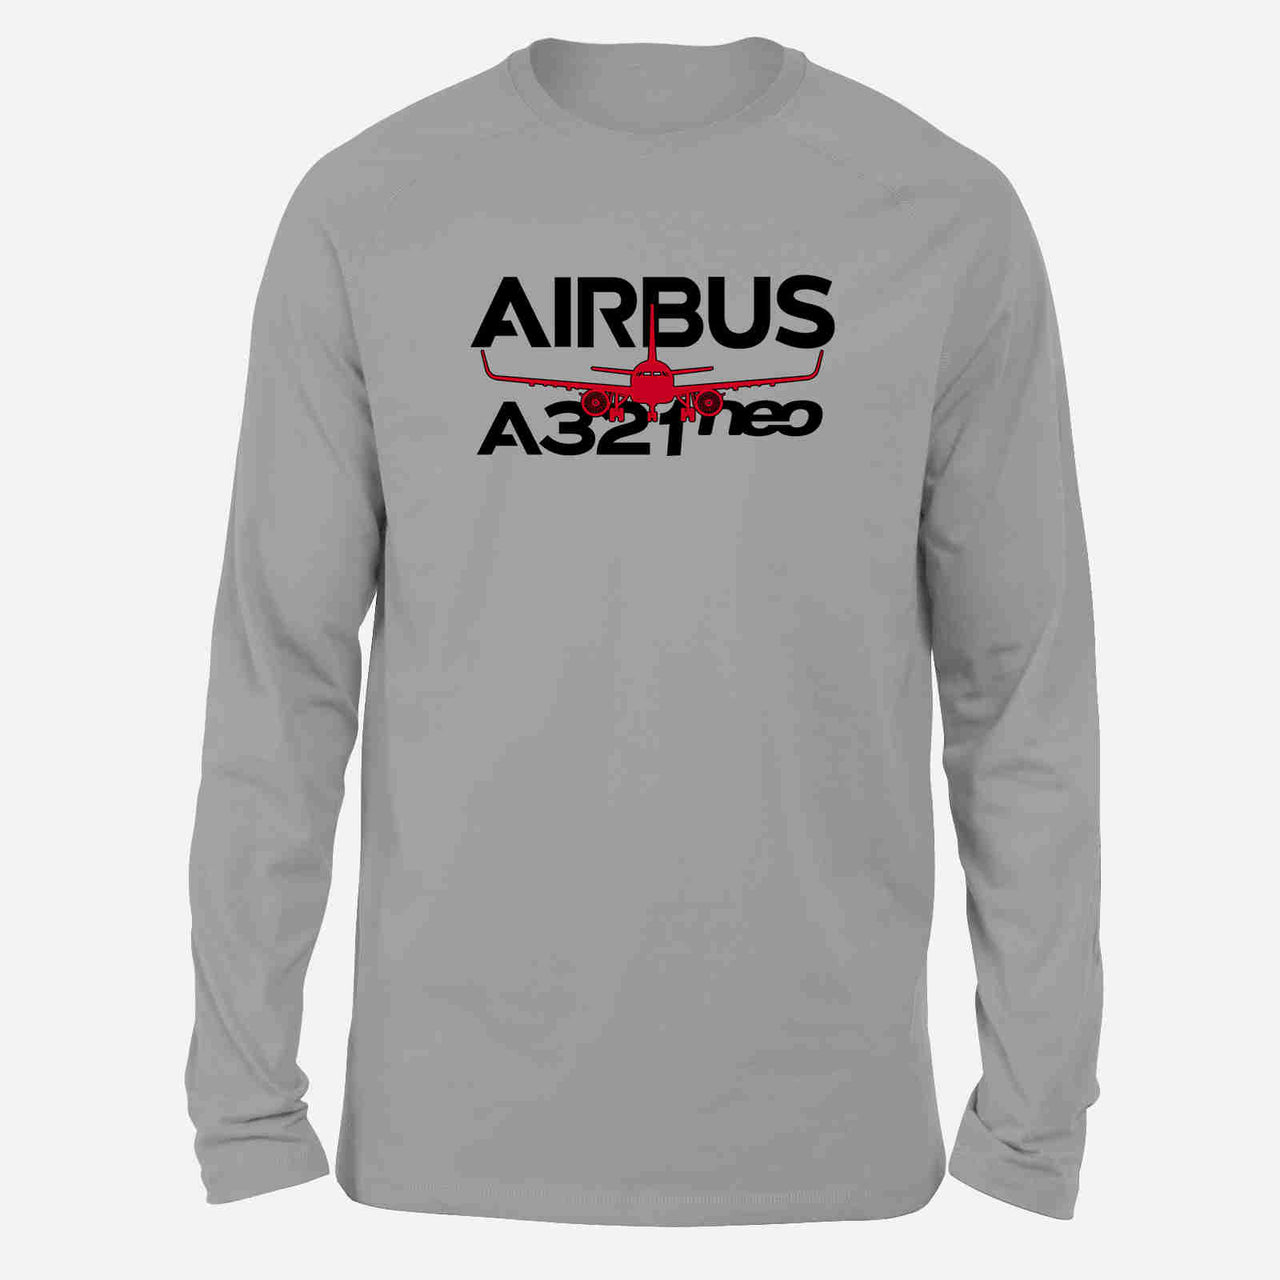 Amazing Airbus A321neo Designed Long-Sleeve T-Shirts